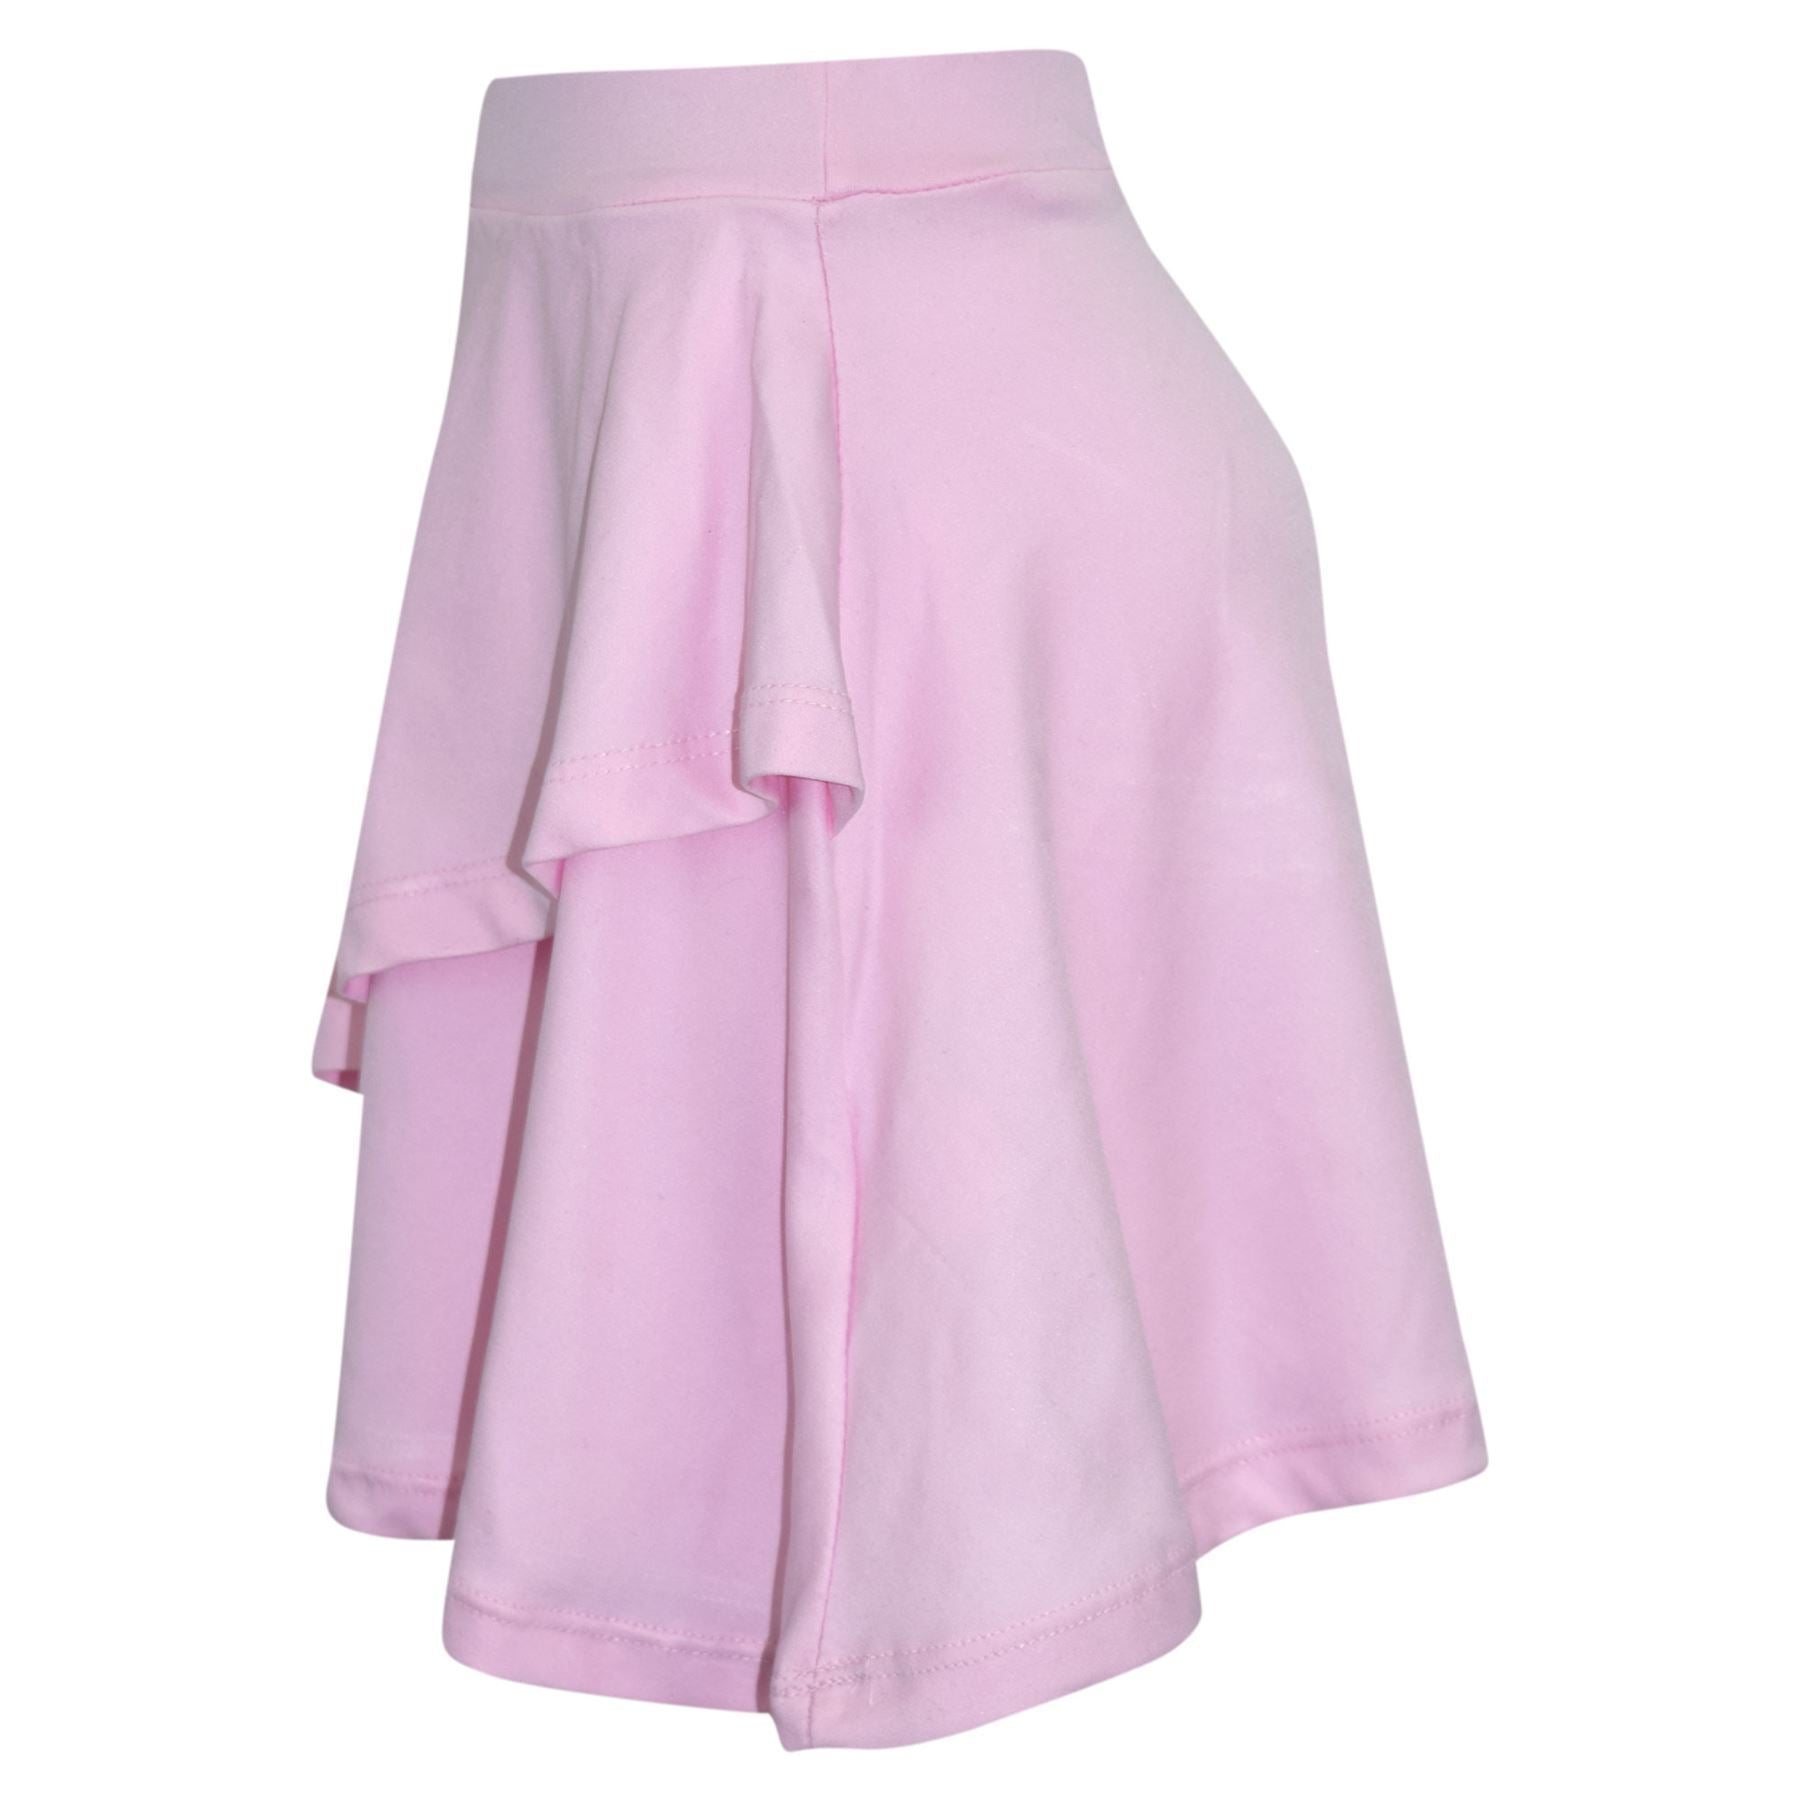 Gilrs Skirt Kids Plain Color School Fashion Dance Frill Skirts Age 5-13 Years